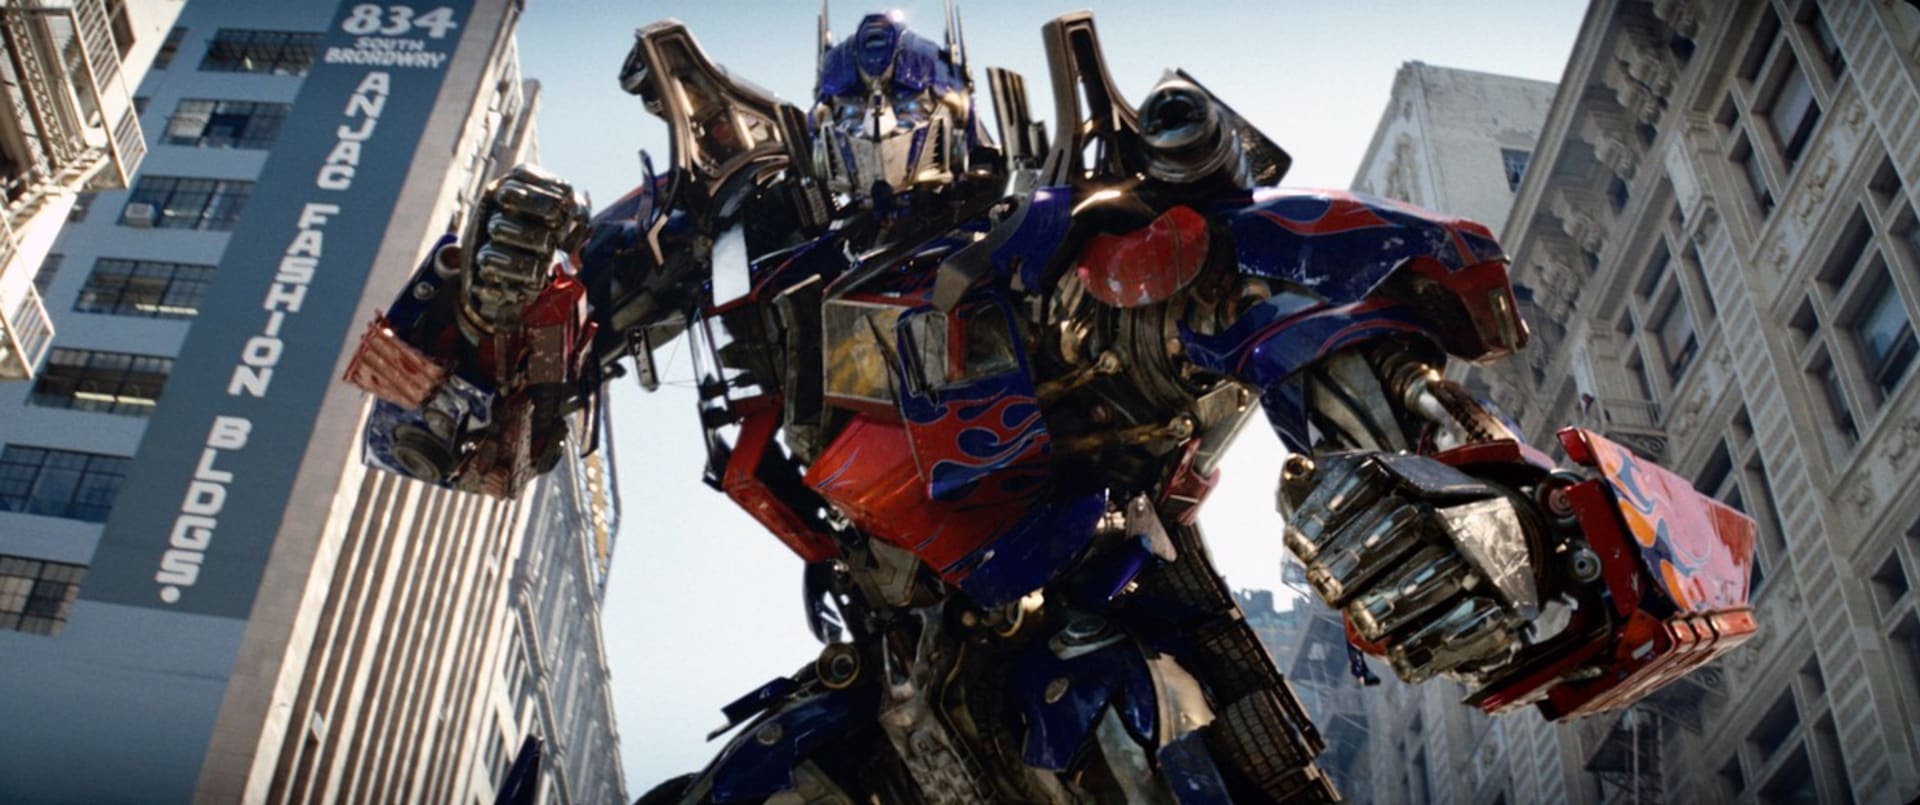 Optimus Prime a filmová série Transformers.